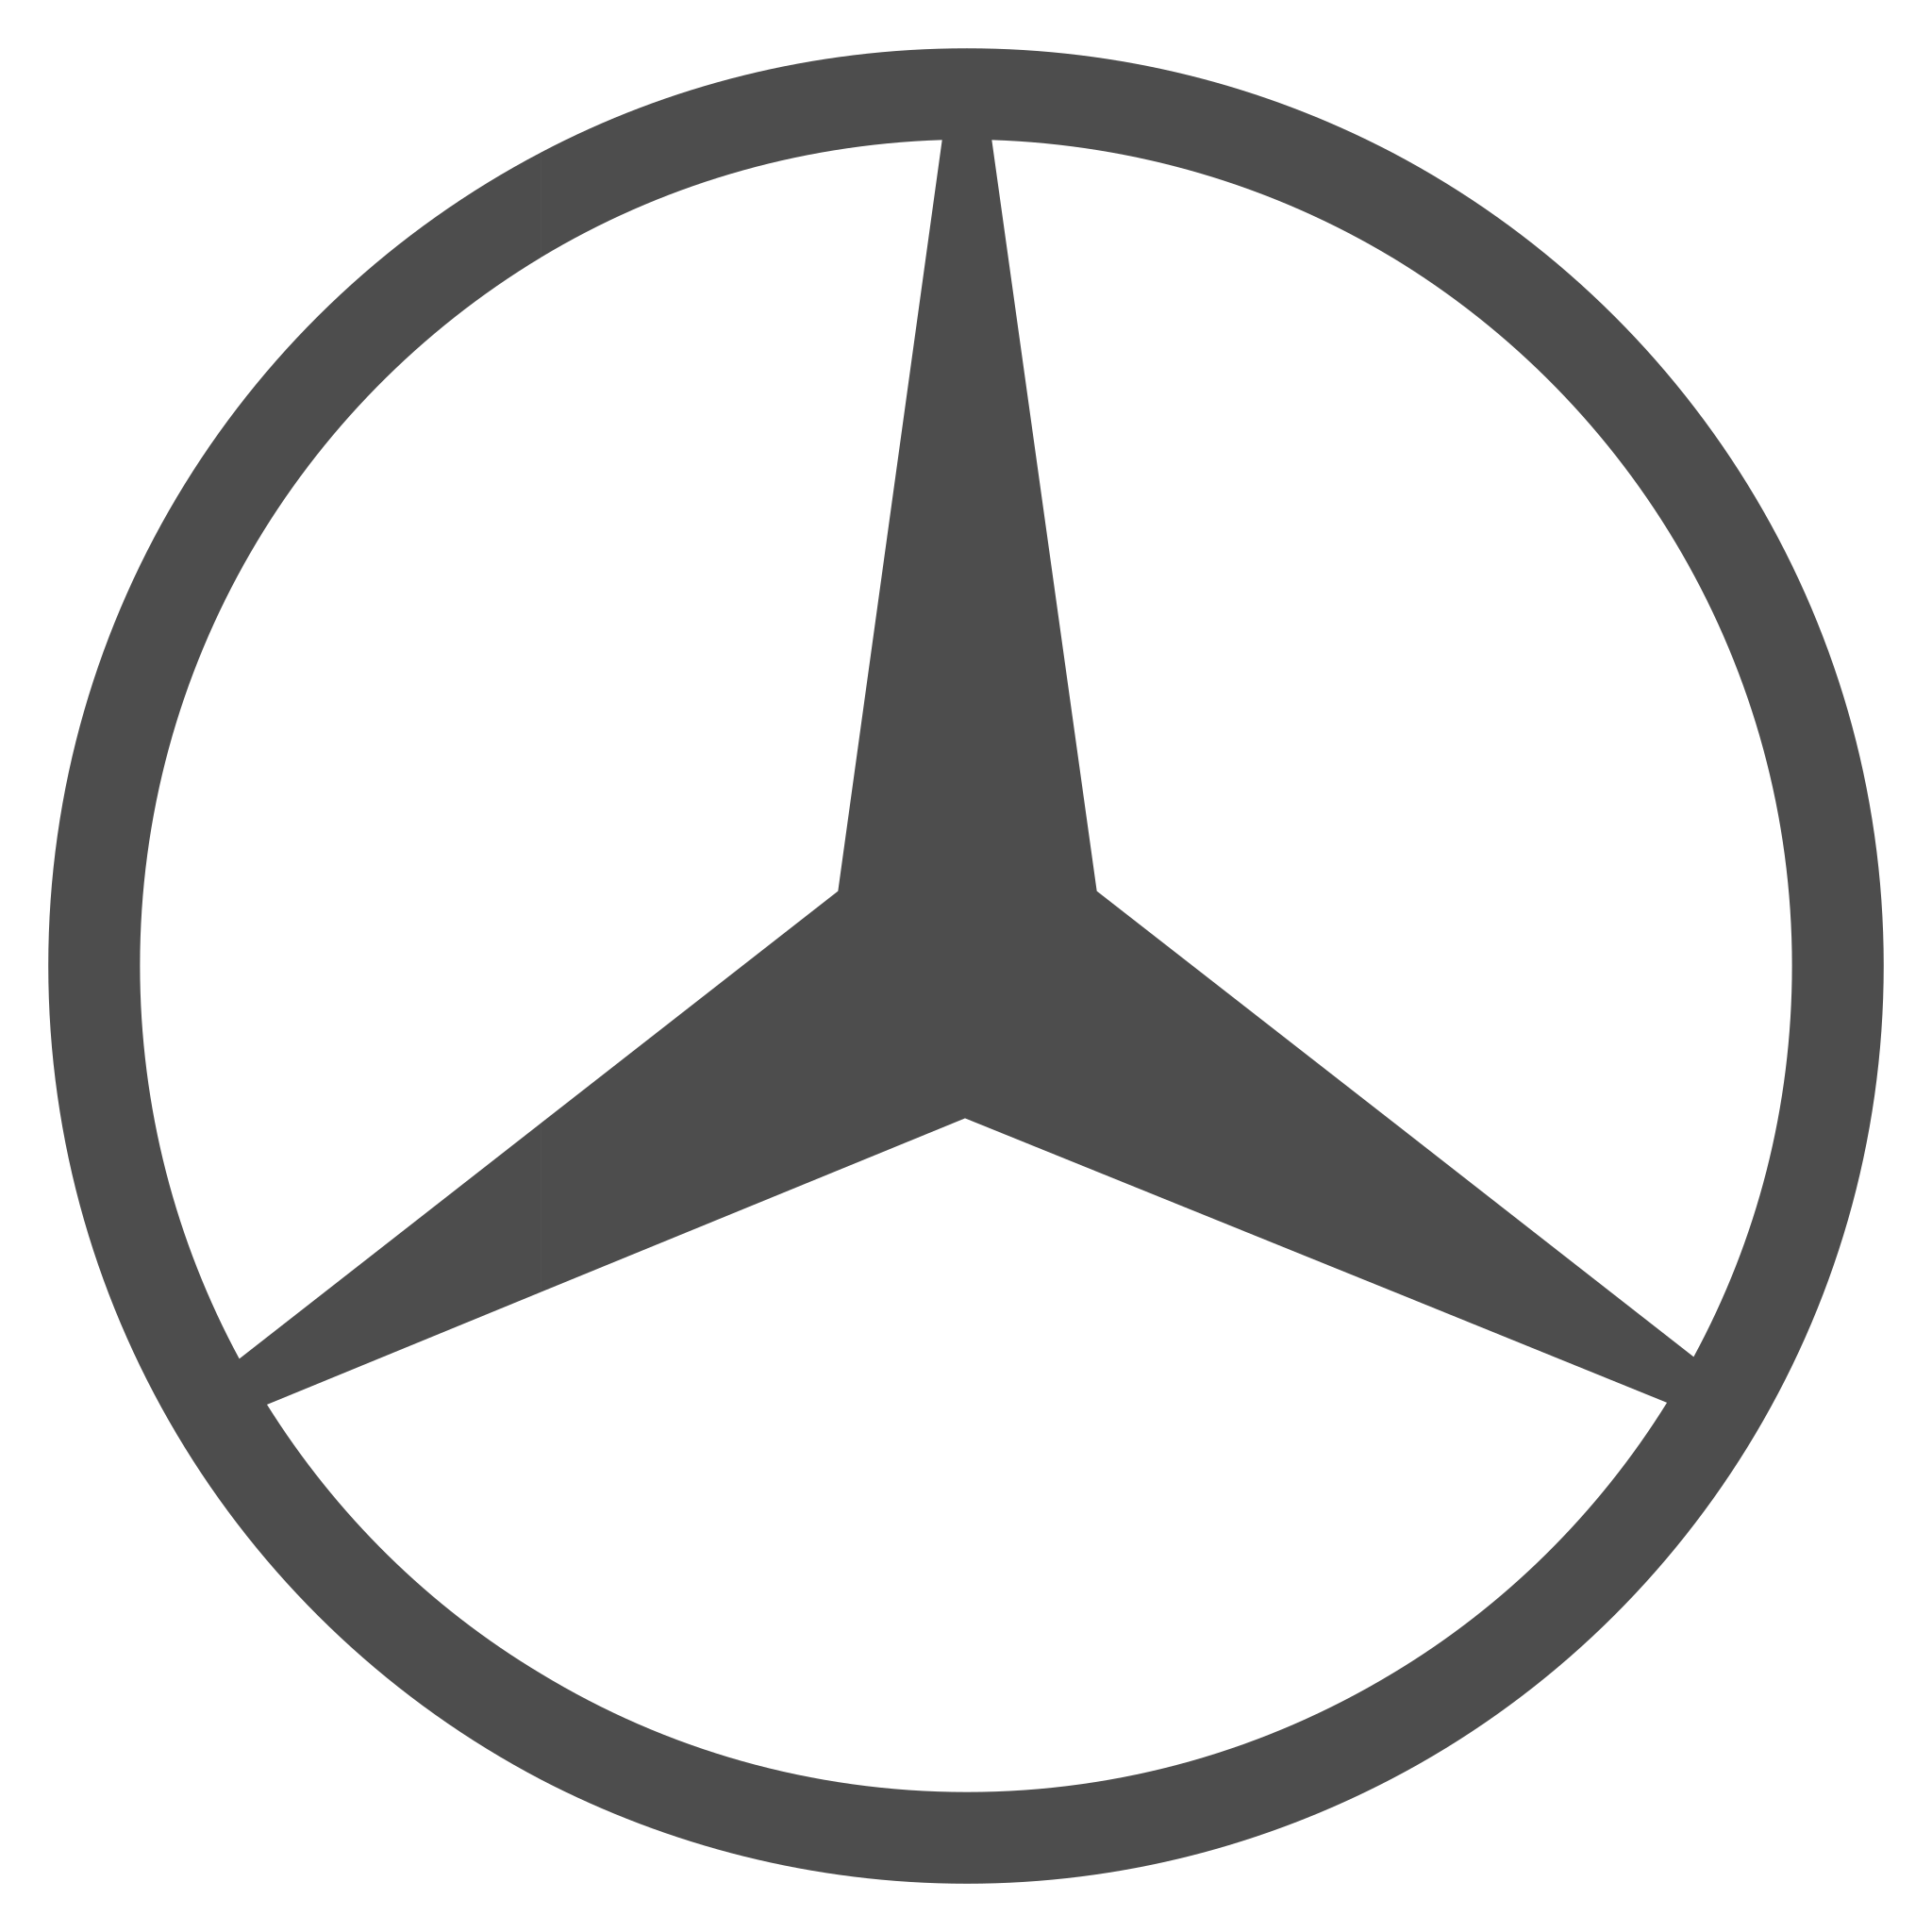 Mercedes-Benz Türk